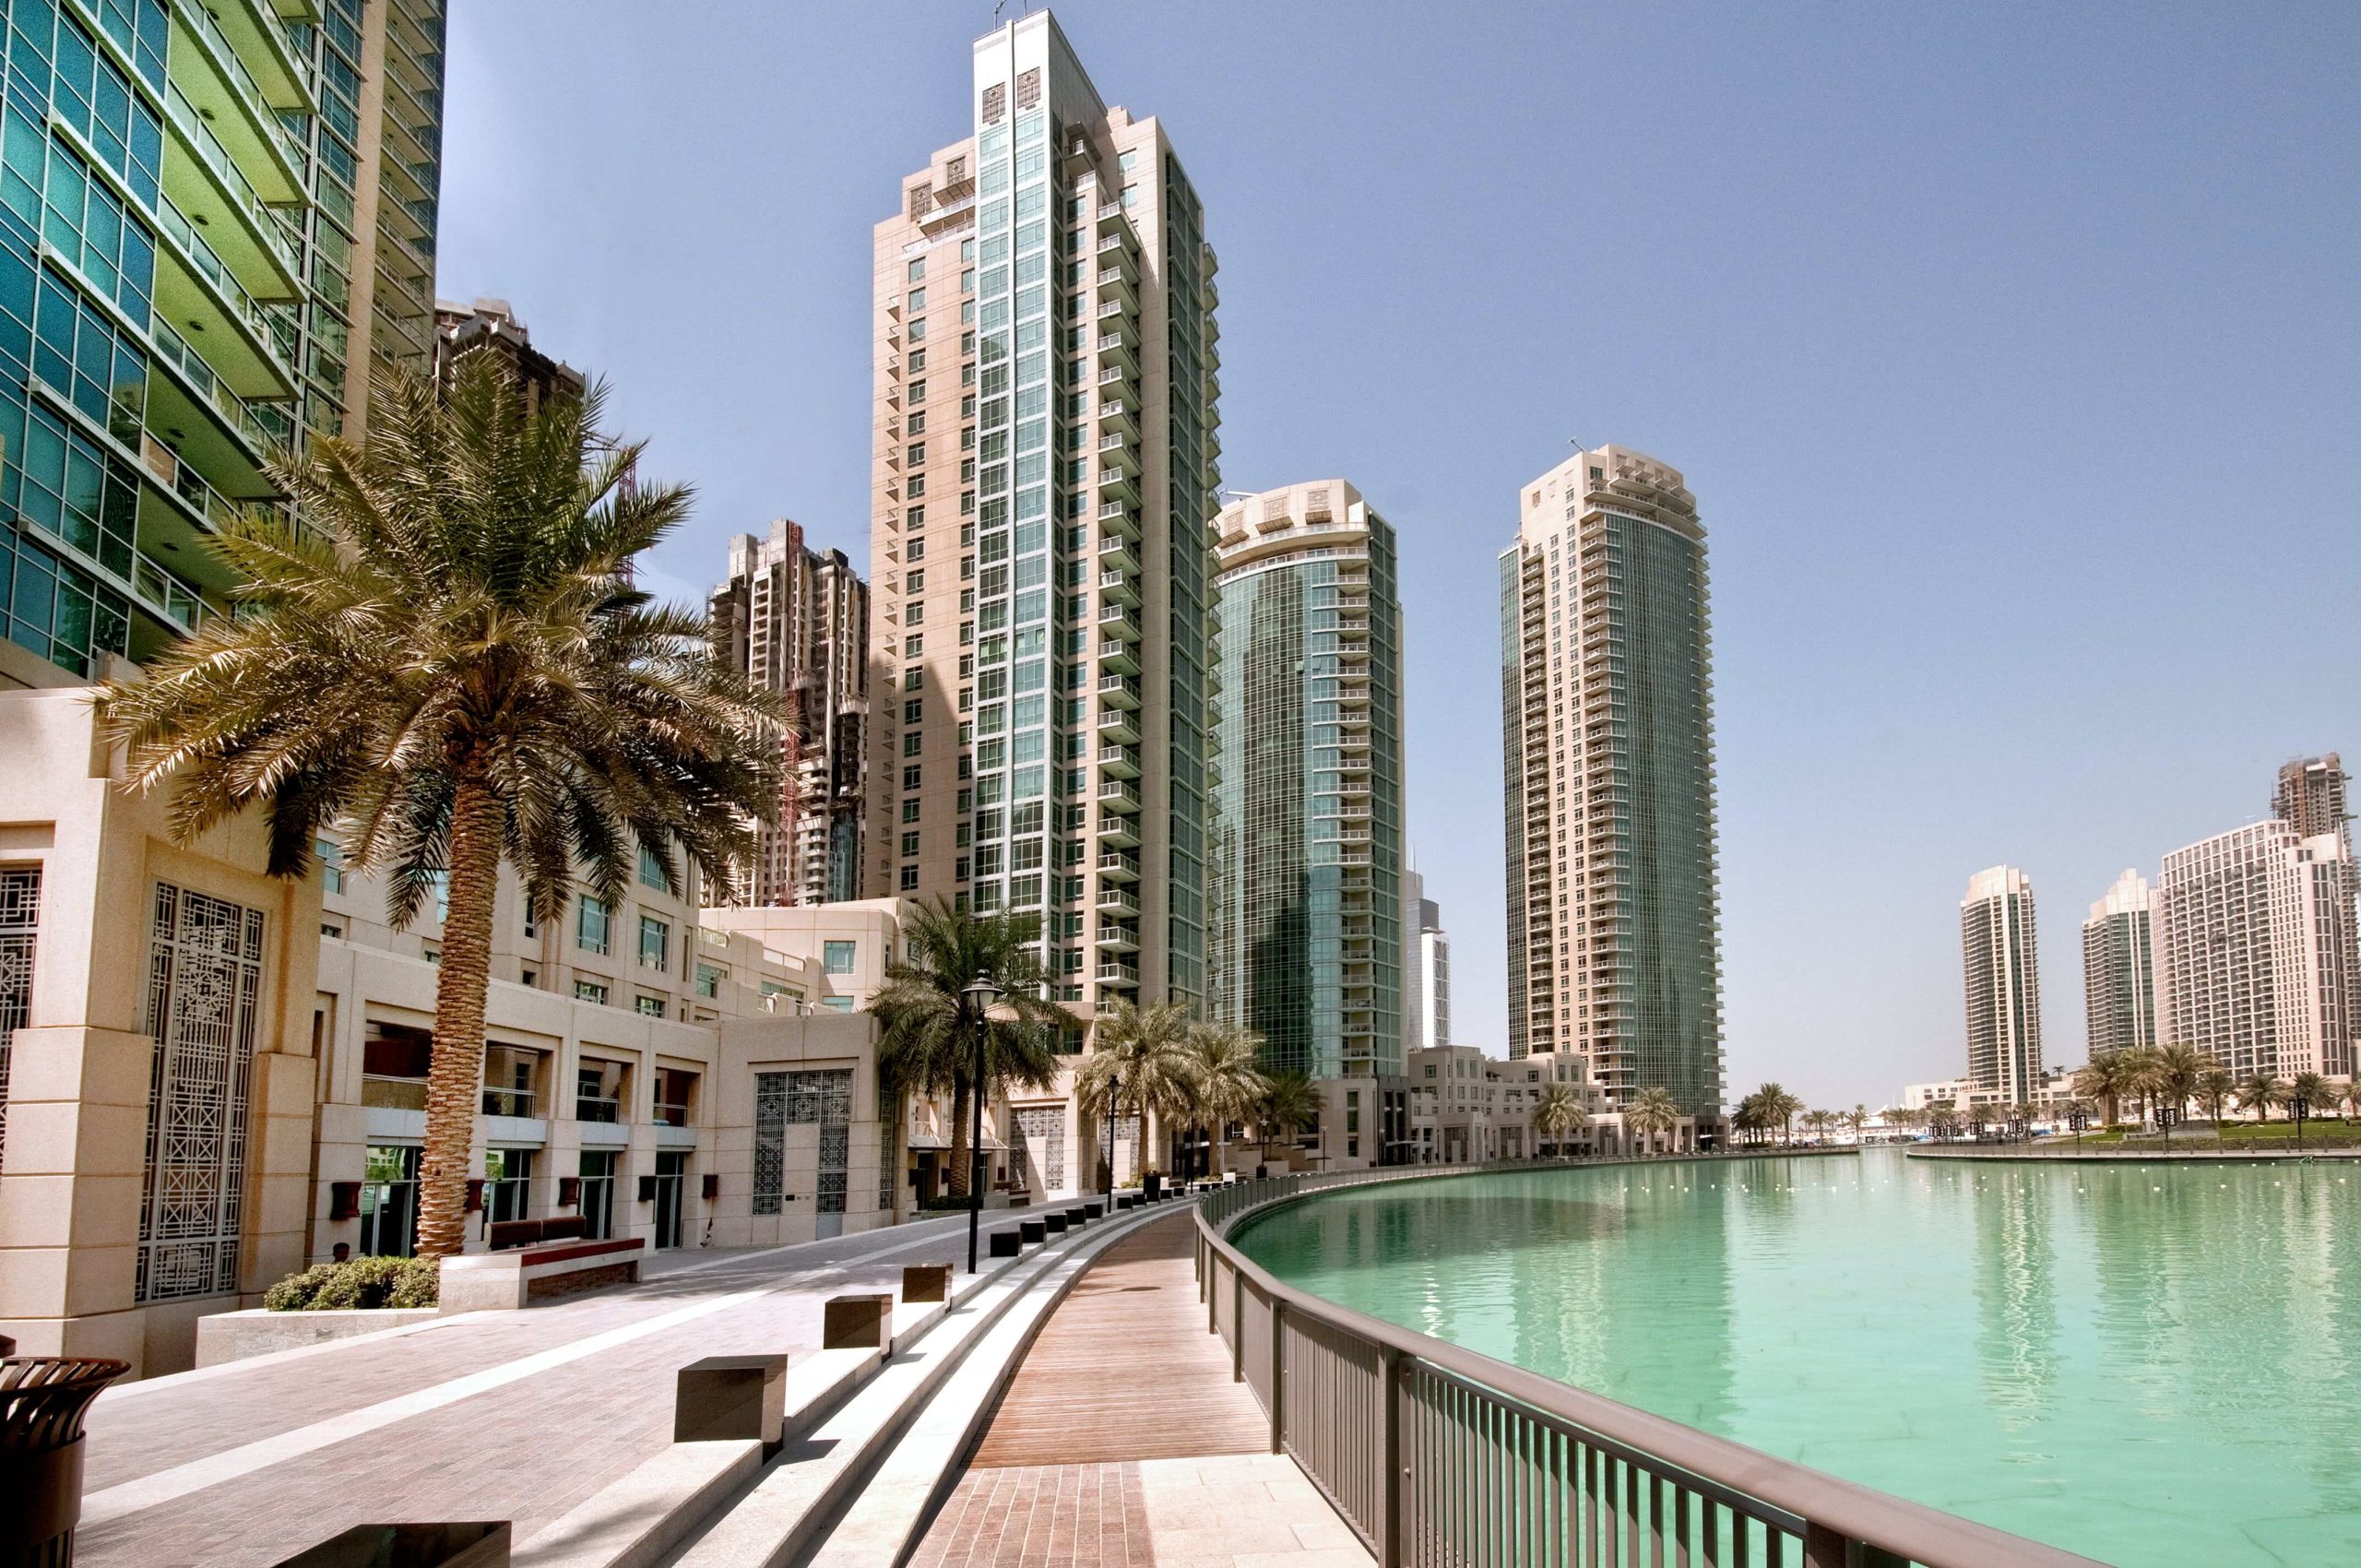 Property Management Services in Dubai